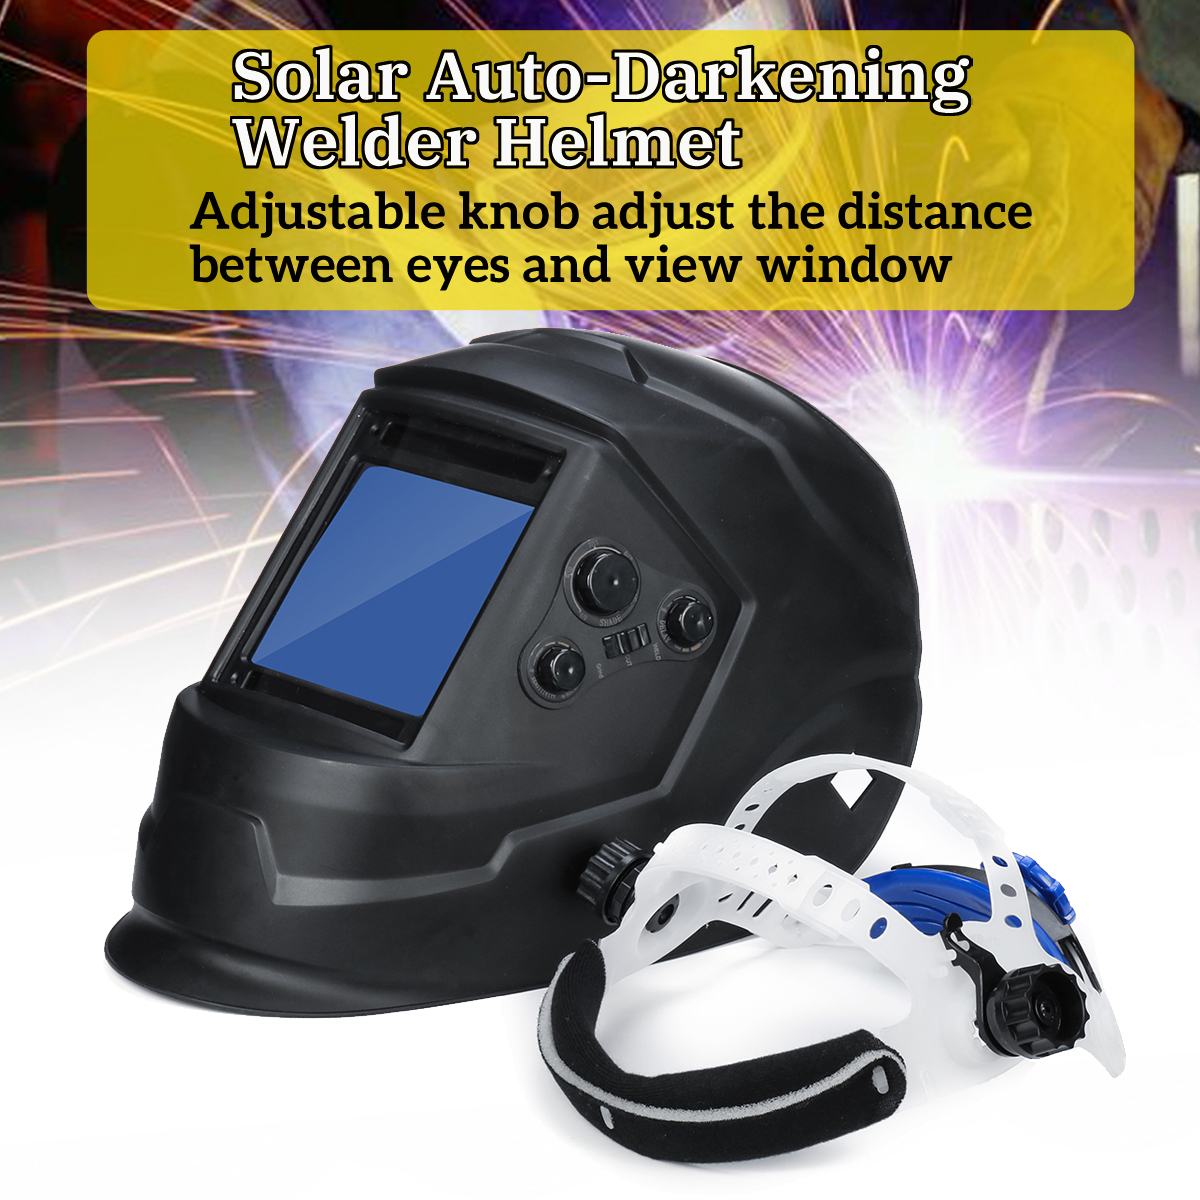 Solar-Energy-Automatic-Dimming-Welding-Mask-Auto-Darkening-Welding-Helmet-Big-View-Area-4-Sensors-Ex-1534647-3